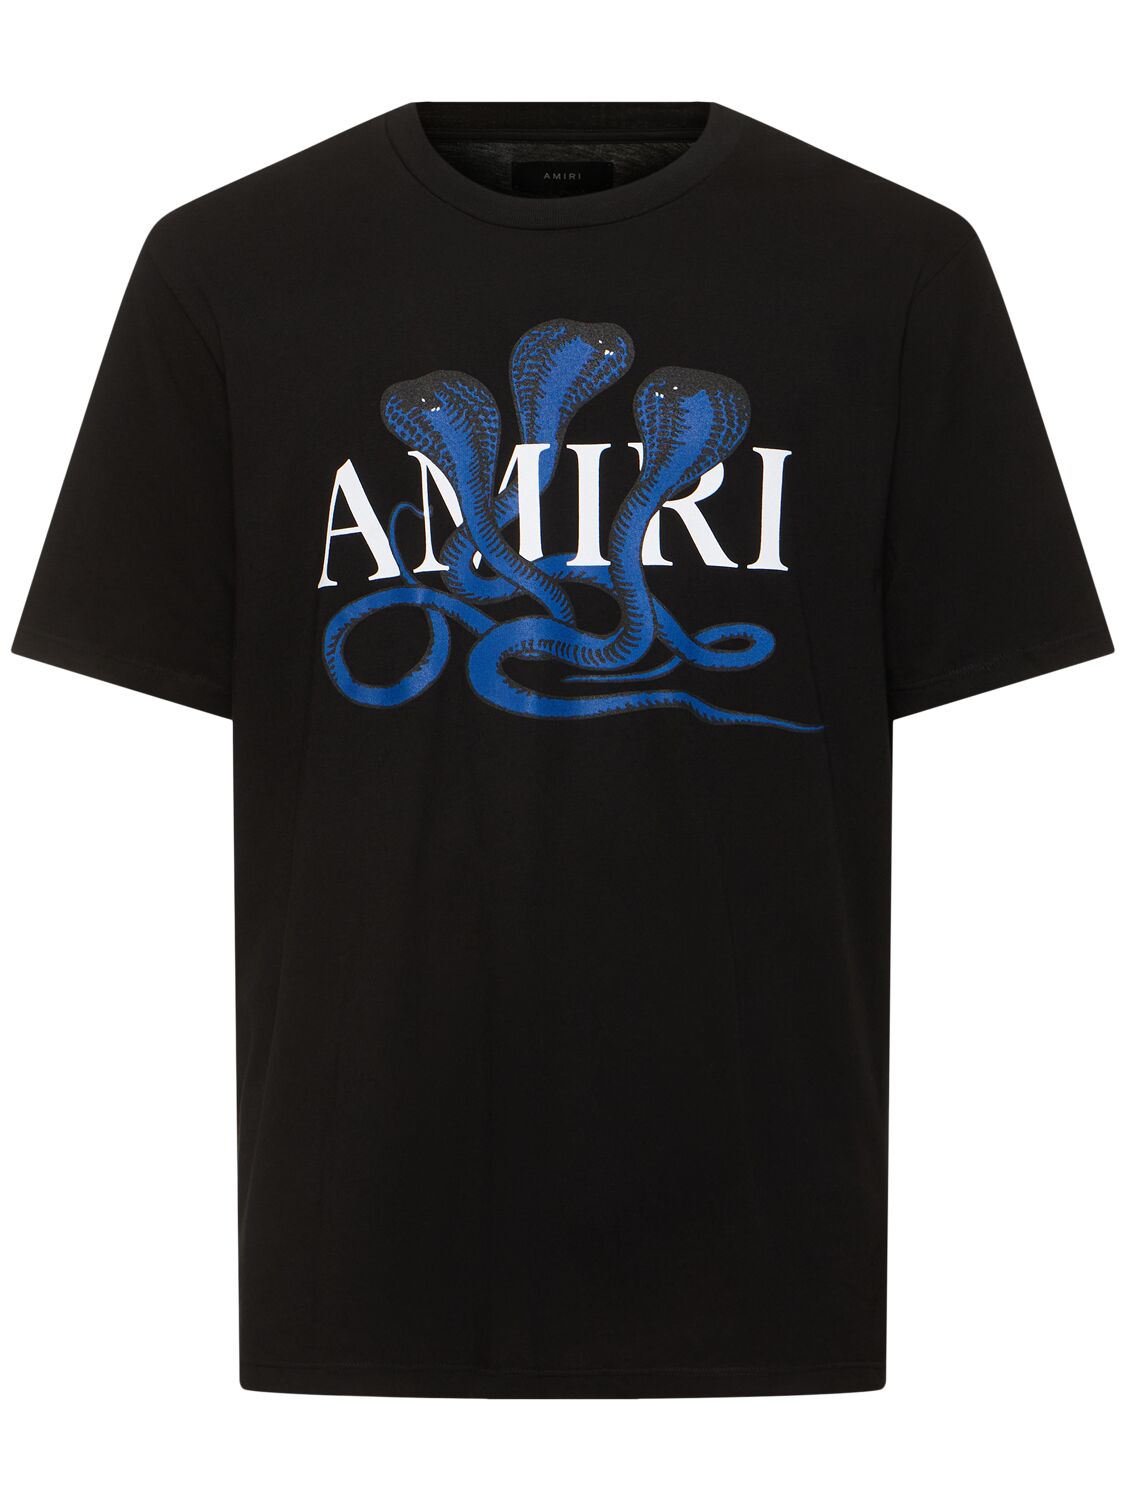 Amiri Snake T-shirt In Black/blue